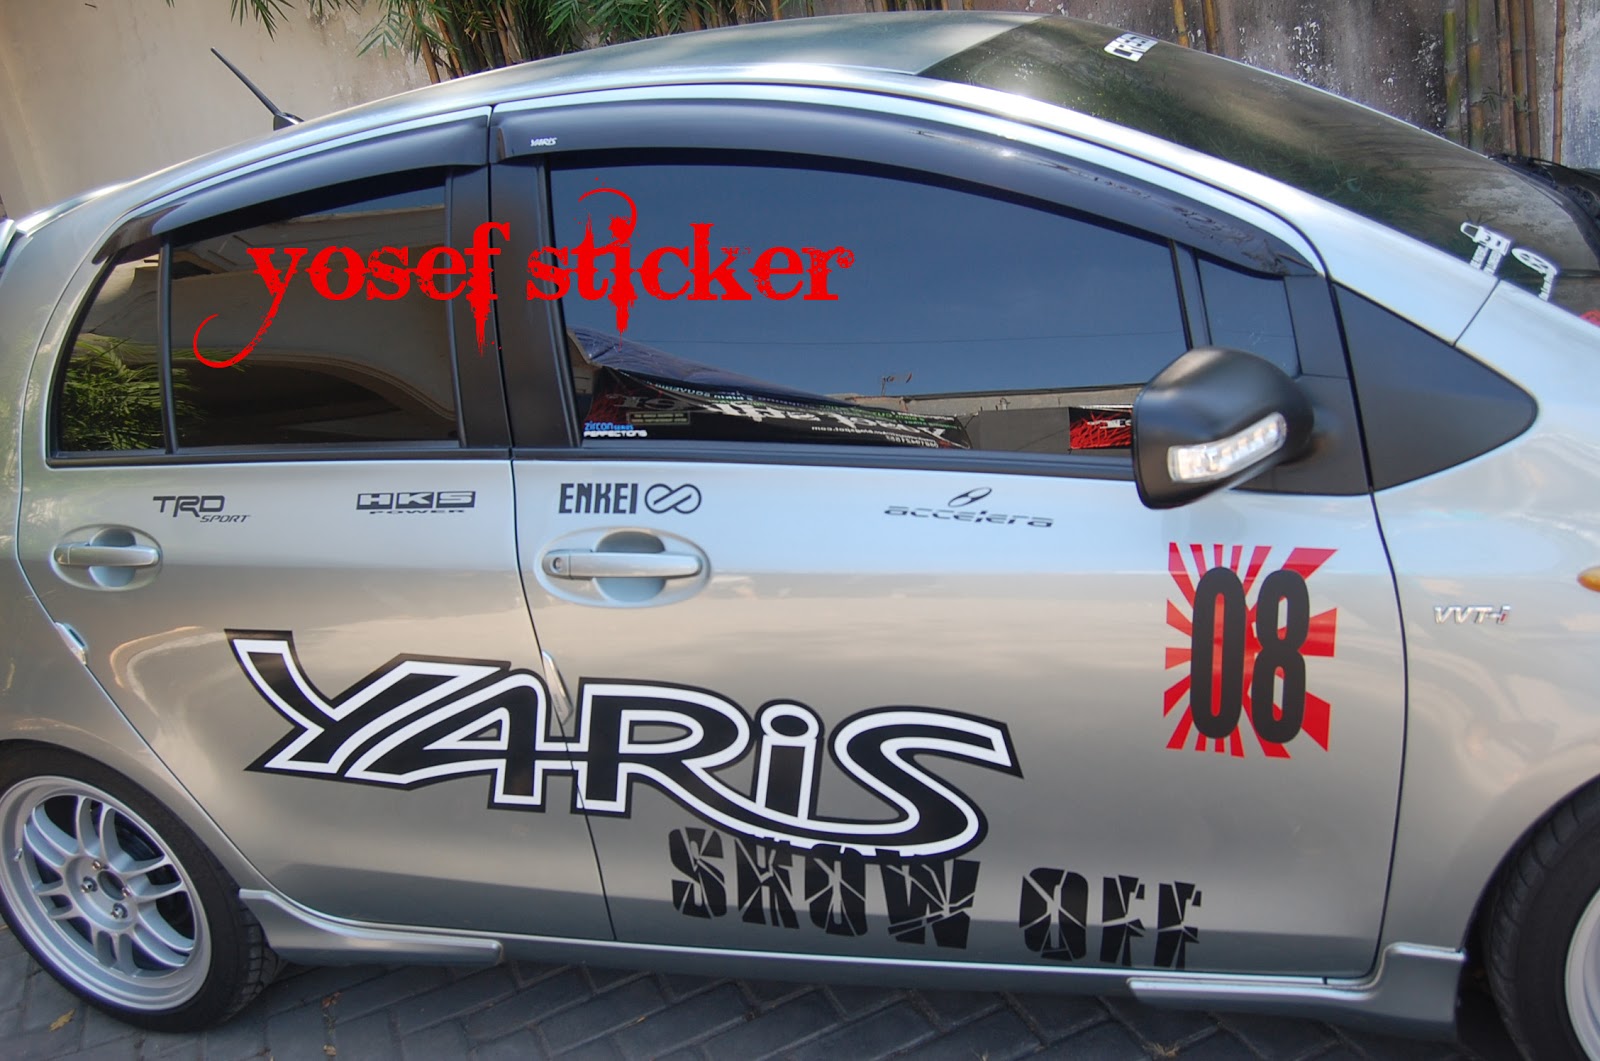  Cutting Sticker Mobil Yaris  Sport Strips By Yosef Sticker  